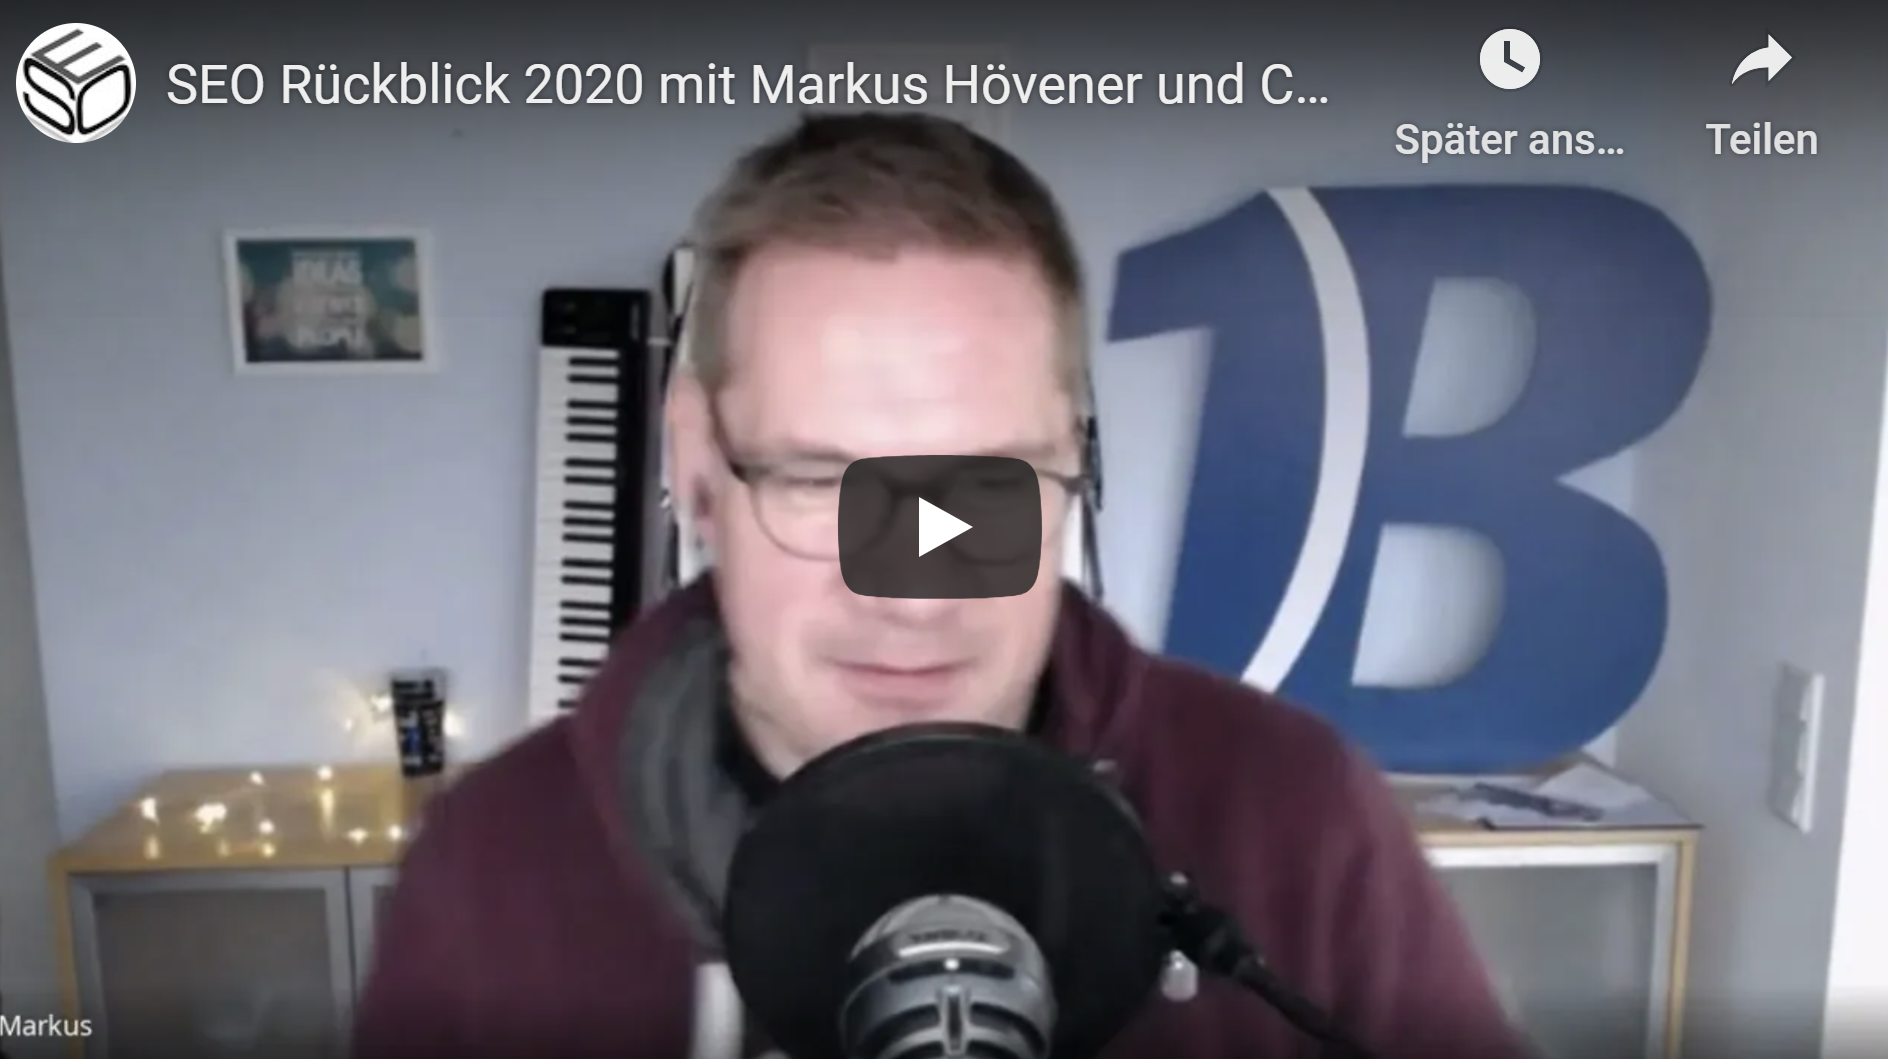 SEO-Rückblick 2020 mit Markus Hövener